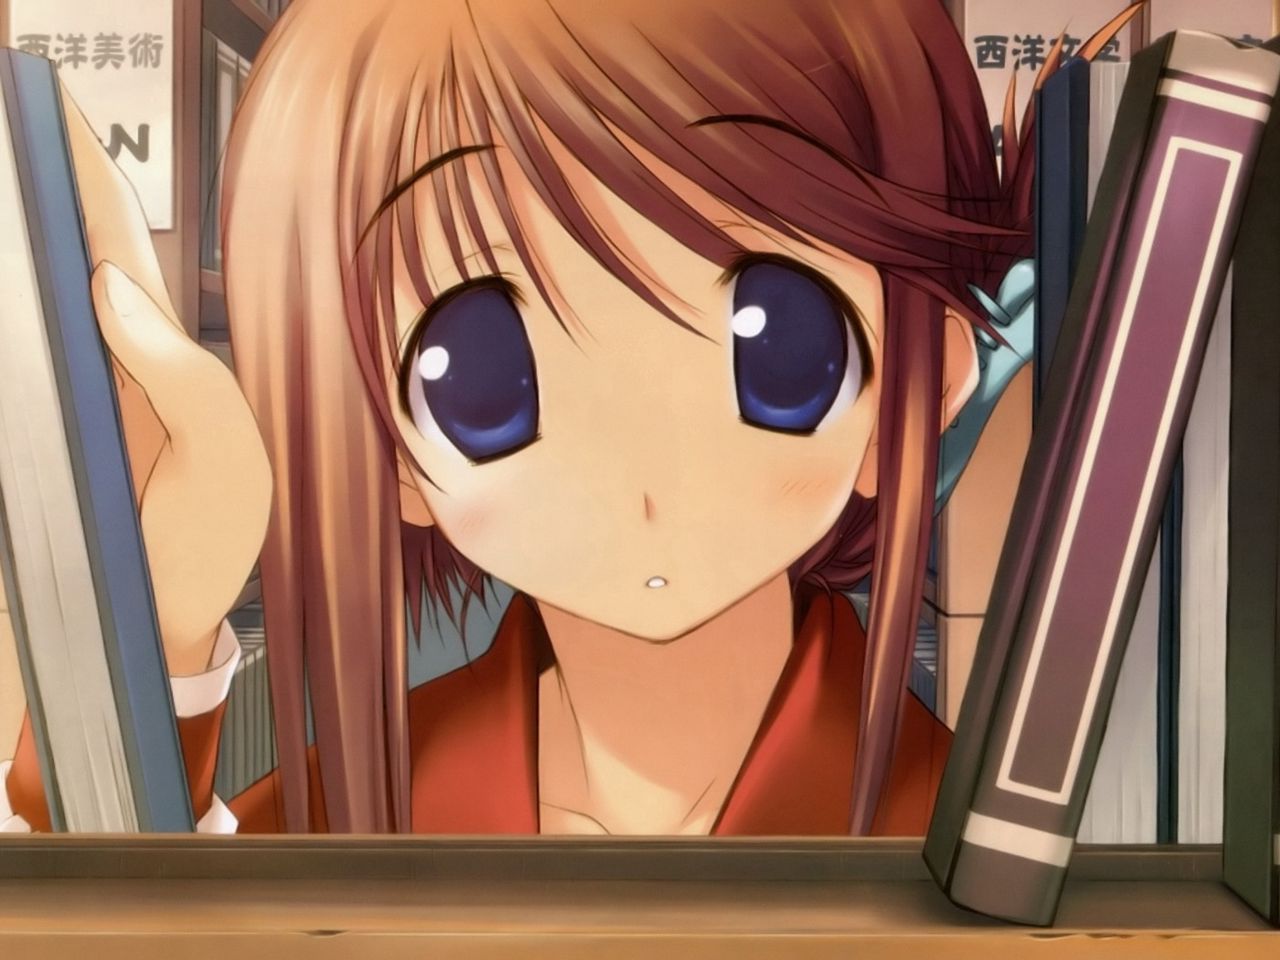 Download wallpaper 1280x960 anime, girl, shelf, books, study standard 4:3 HD background